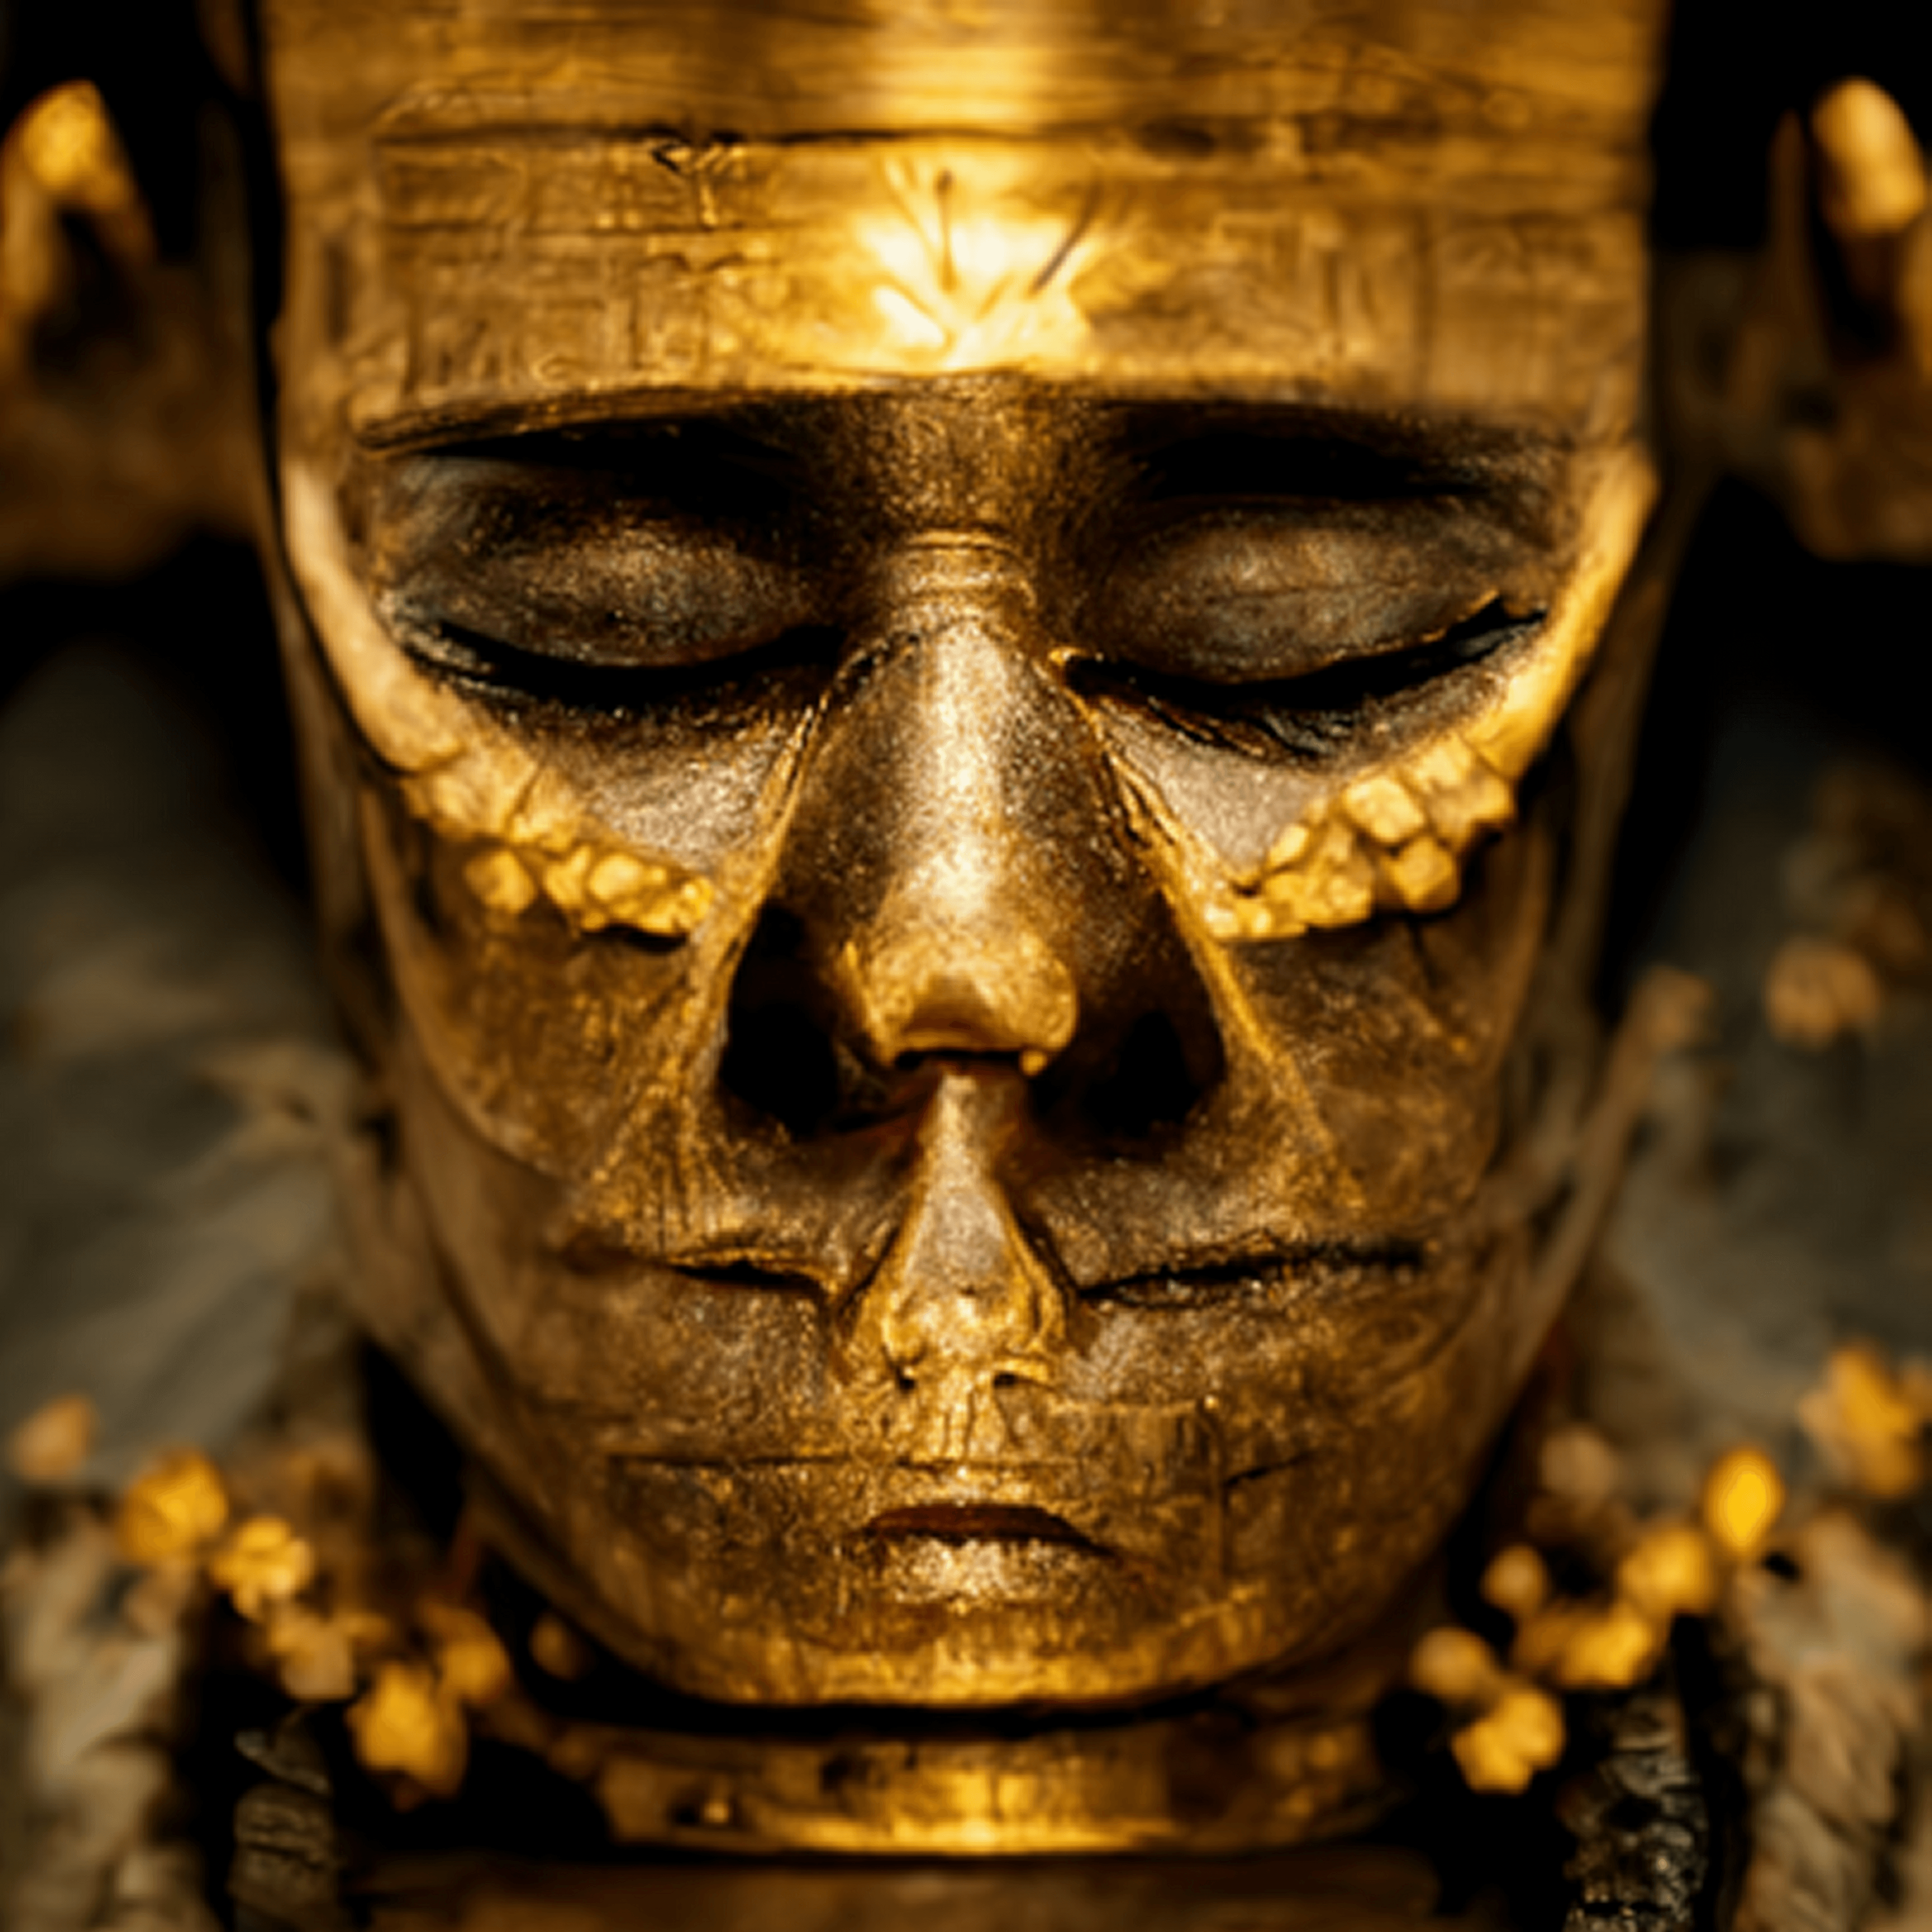 Gold Death Mask No. 1  AI Art 1/1  created by Sollog